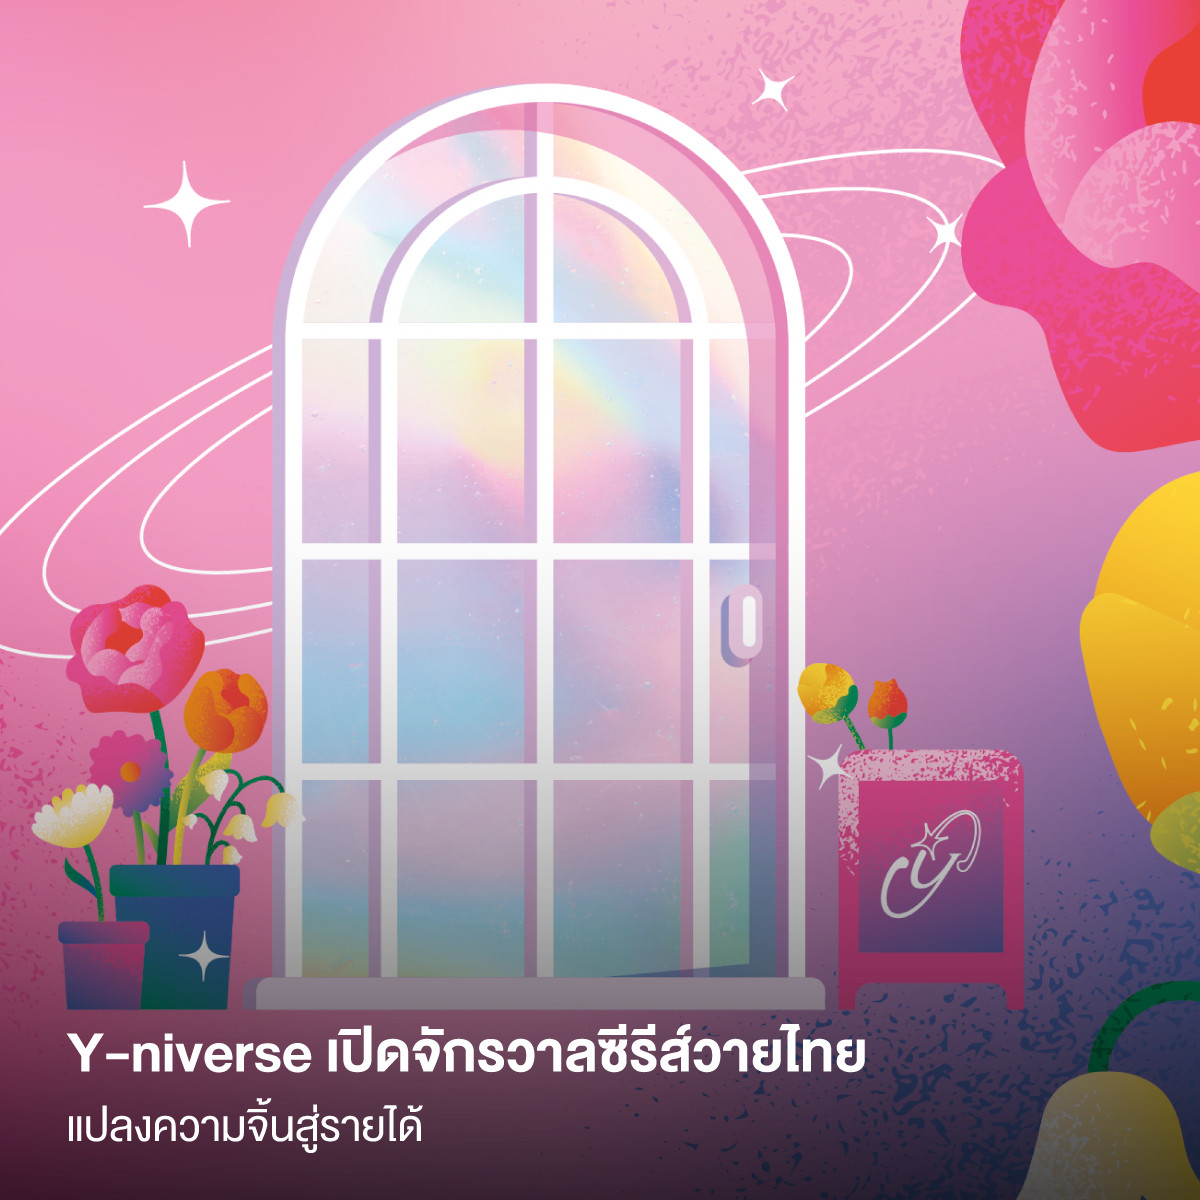 Y-niverse เปิดจักรวาลซีรีส์วายไทย แปลงความจิ้นสู่รายได้